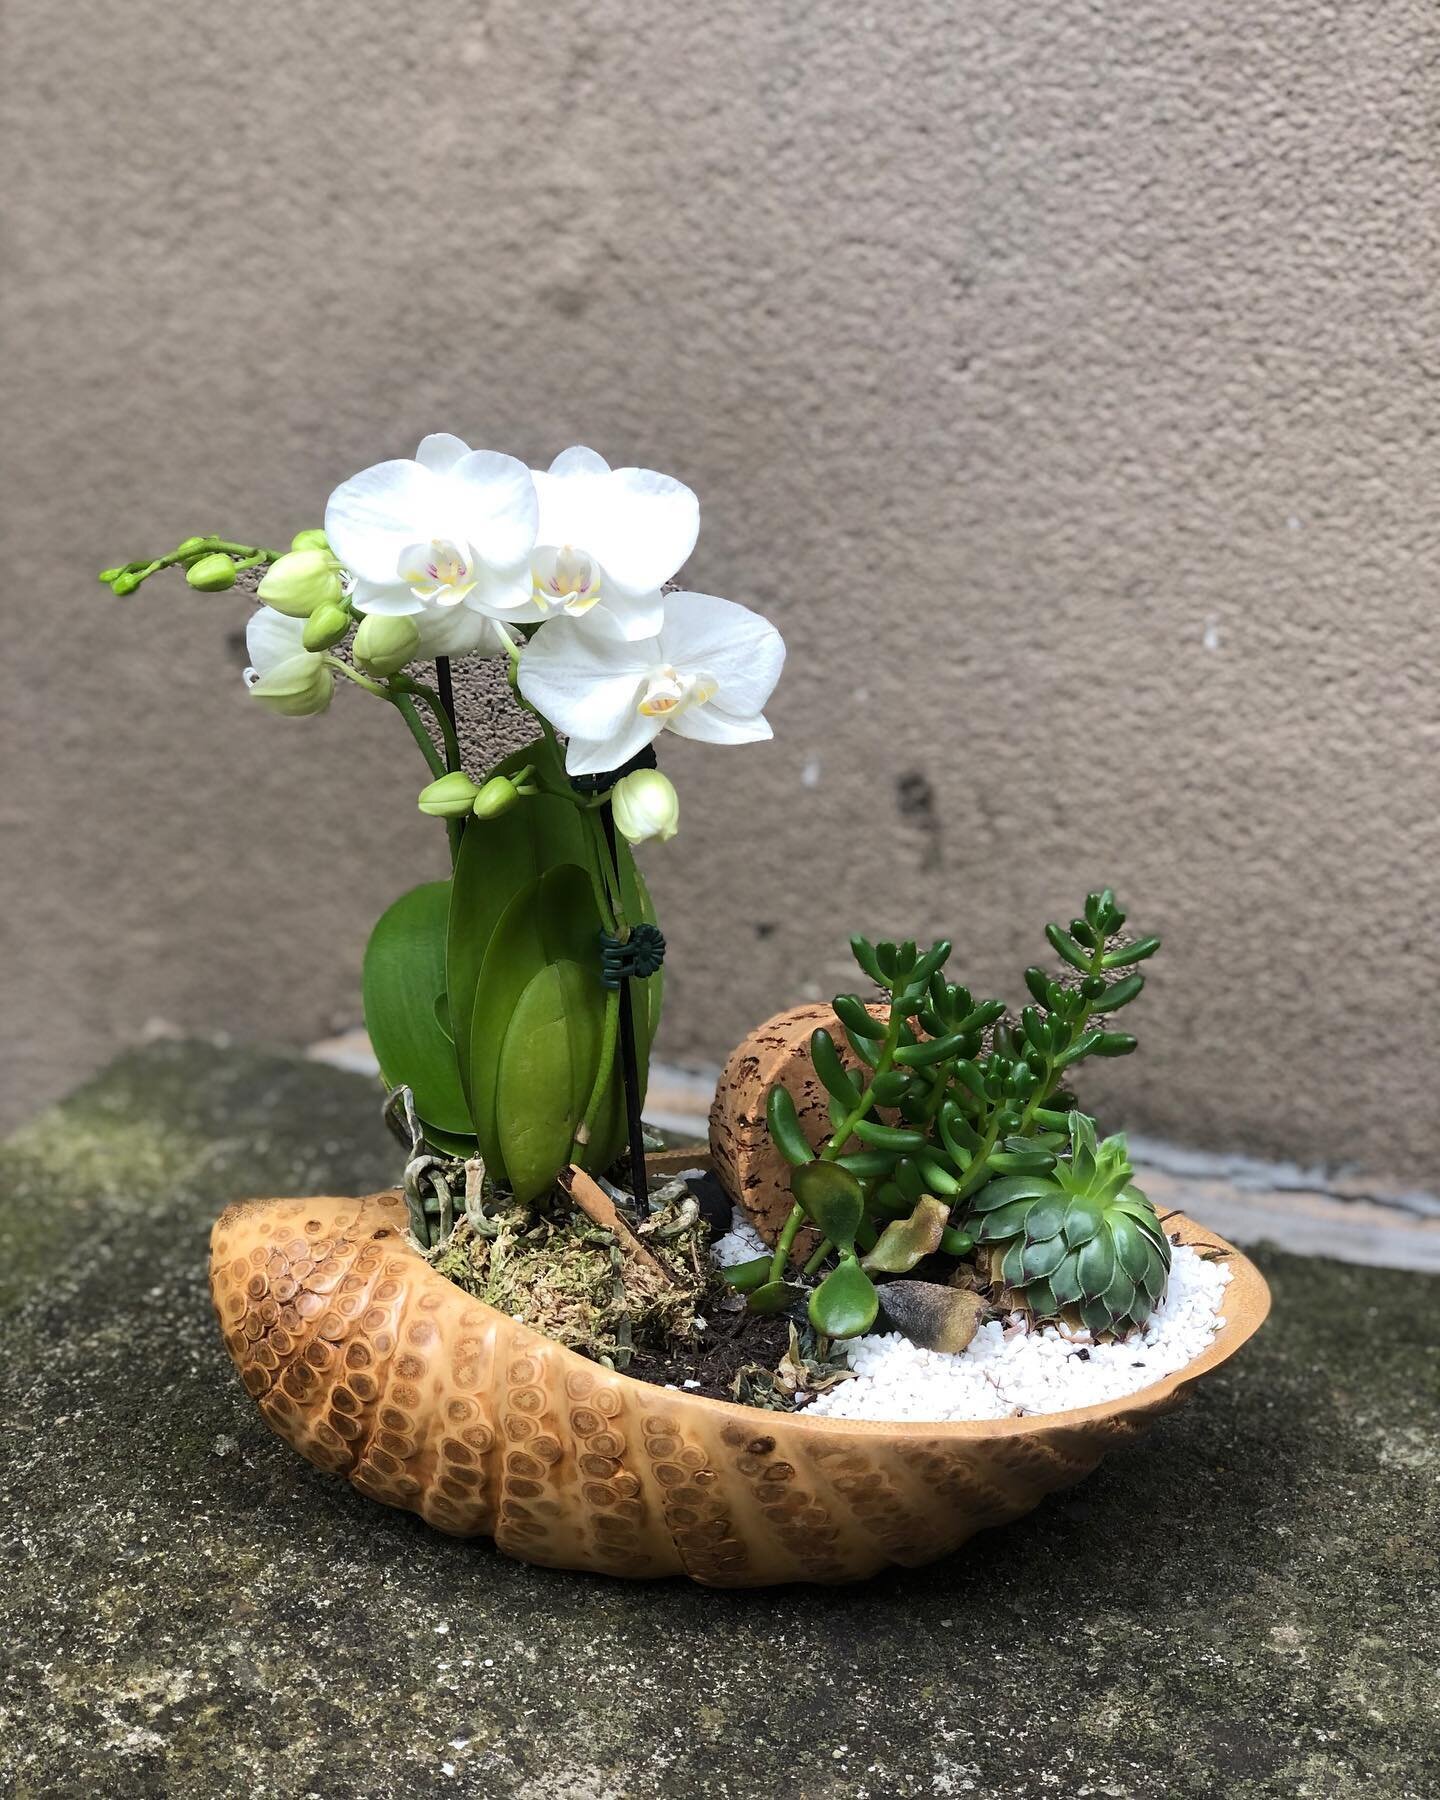 🐚 🐚 🐚 
-
-
-
-
-
-
-
#terrarium #orchids #flowersoftheday #sydneyflorist #plants #plantoftheday #plantsofinstagram #plantsmakepeoplehappy #plantsofinstagram #phalaenopsis